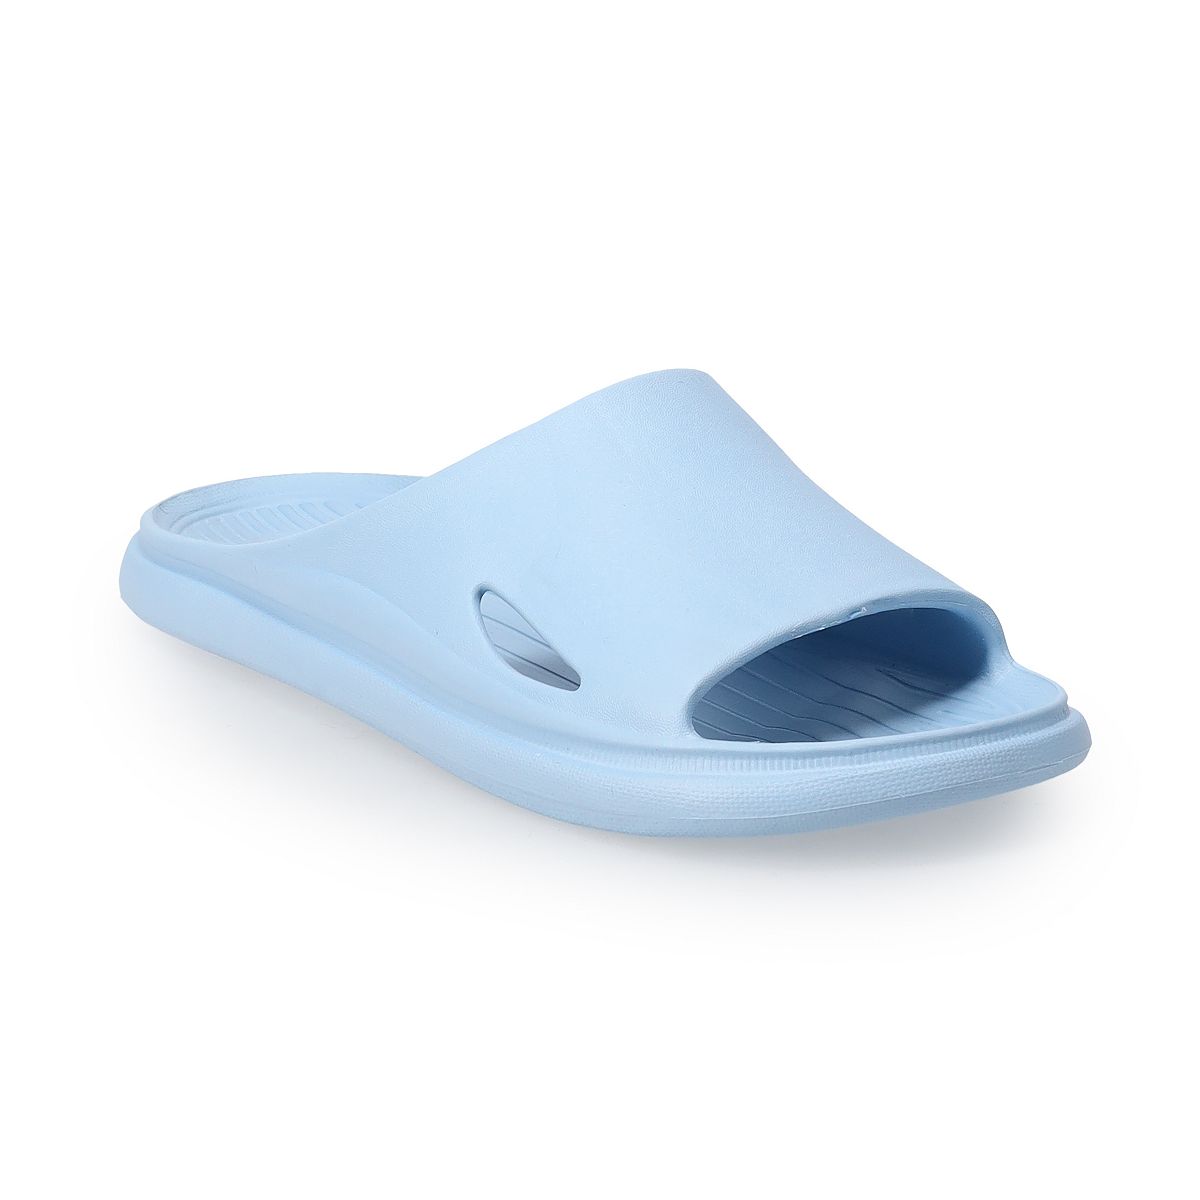 SO Cumin Women’s Slide Sandals reducing them to $7.49